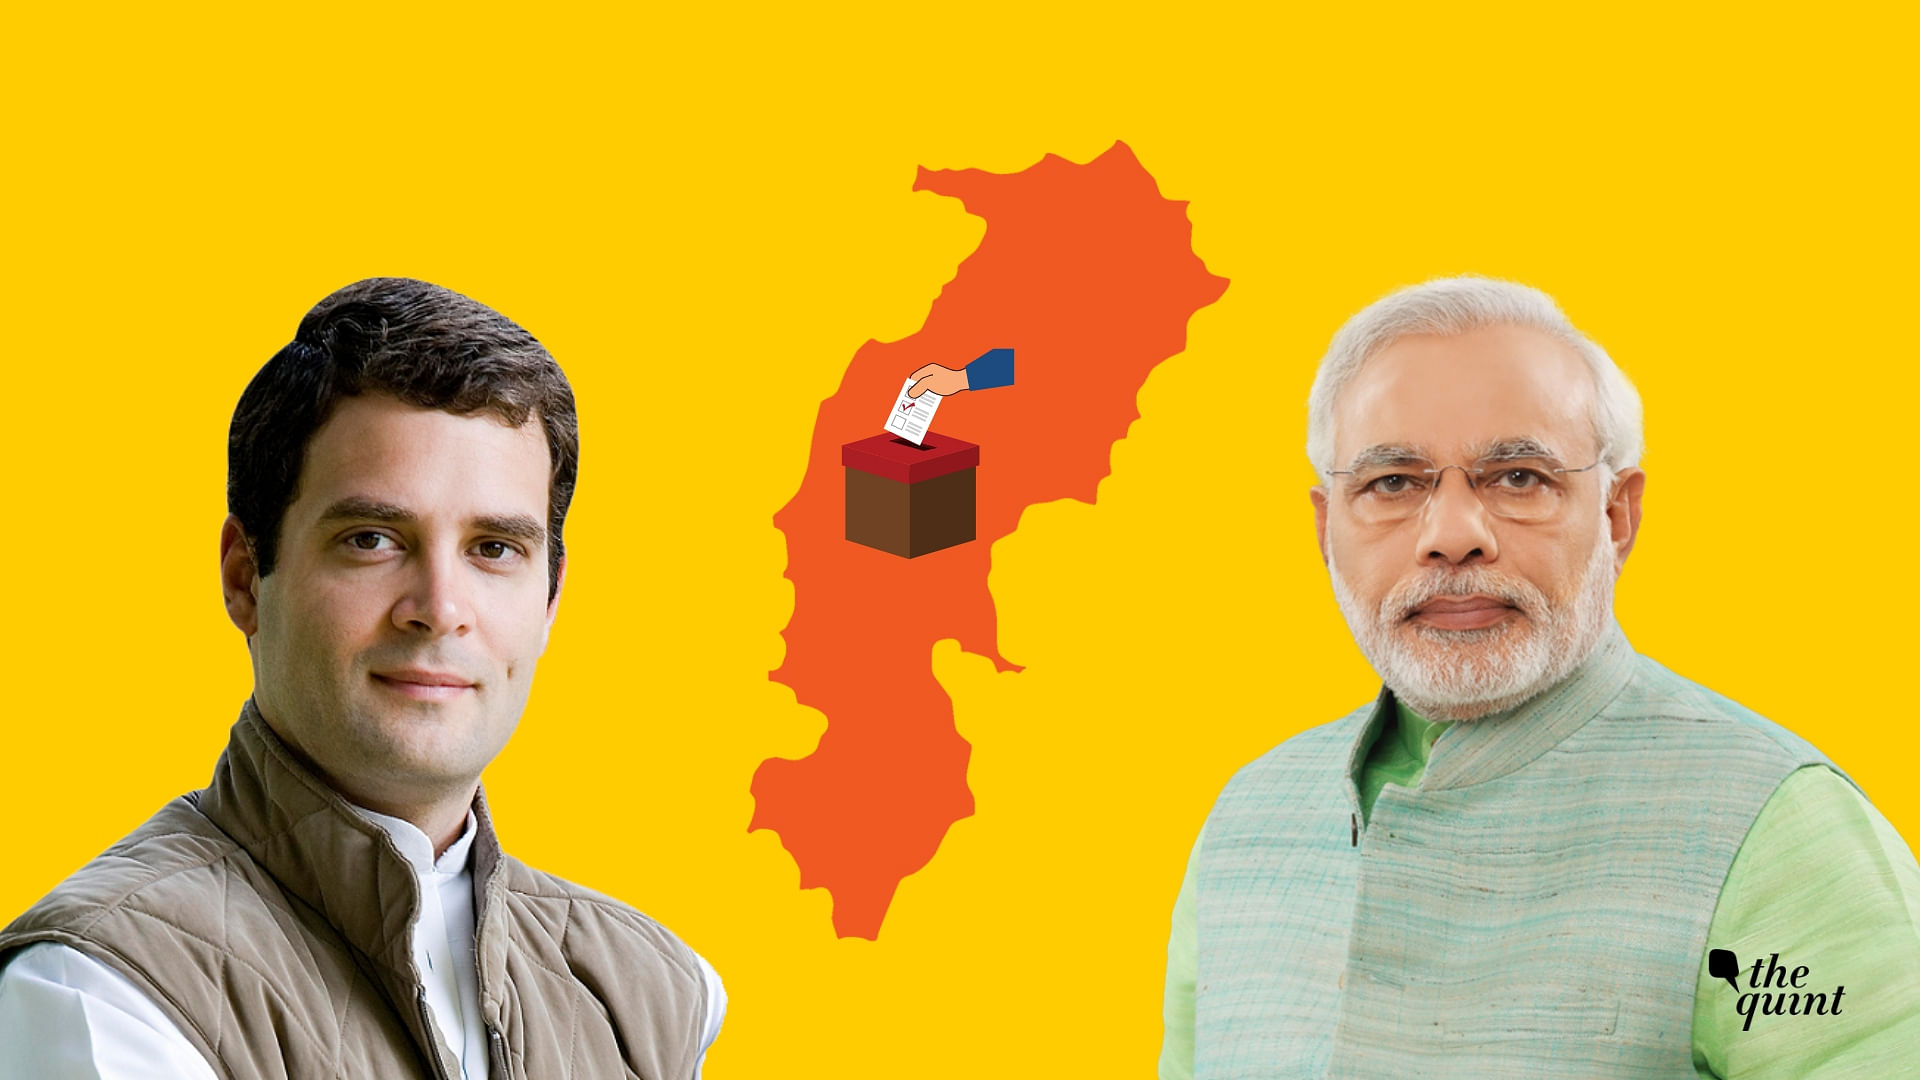 Assembly polls in Chhattisgarh will be held on 12 November and 20 November.